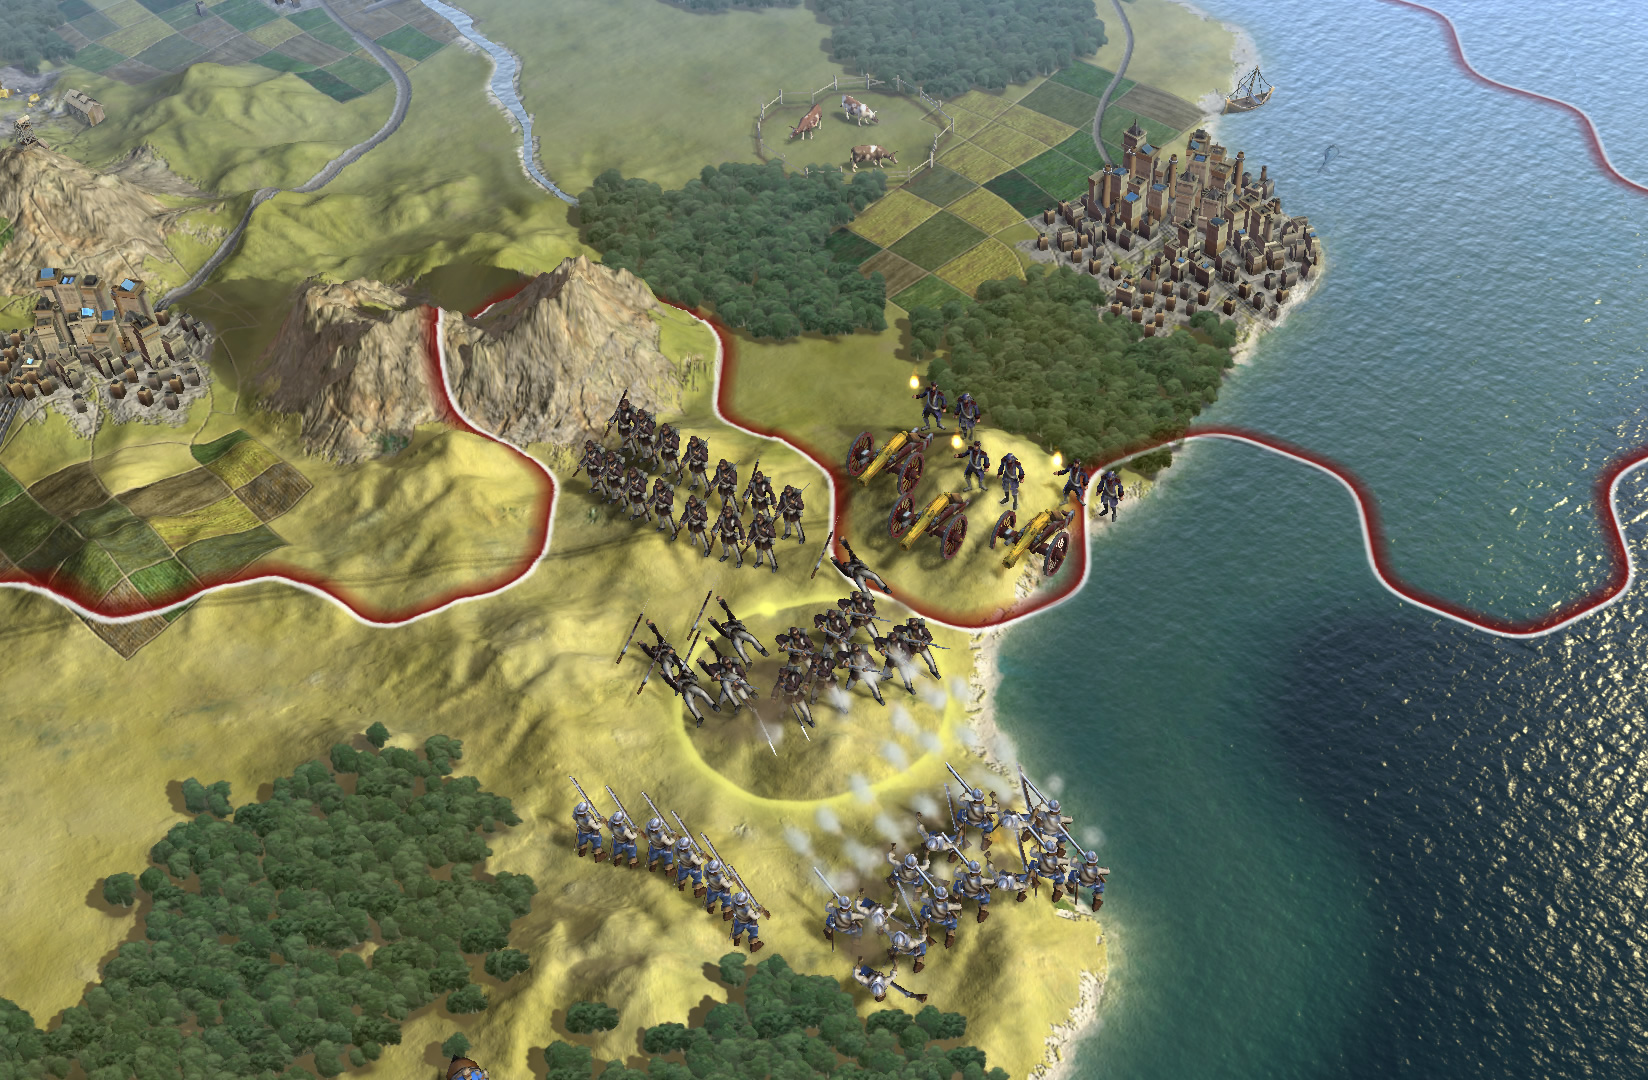 Civilization, Civilization V, Civ V, Map, Game, 4X, Borders, Cities, Strategy